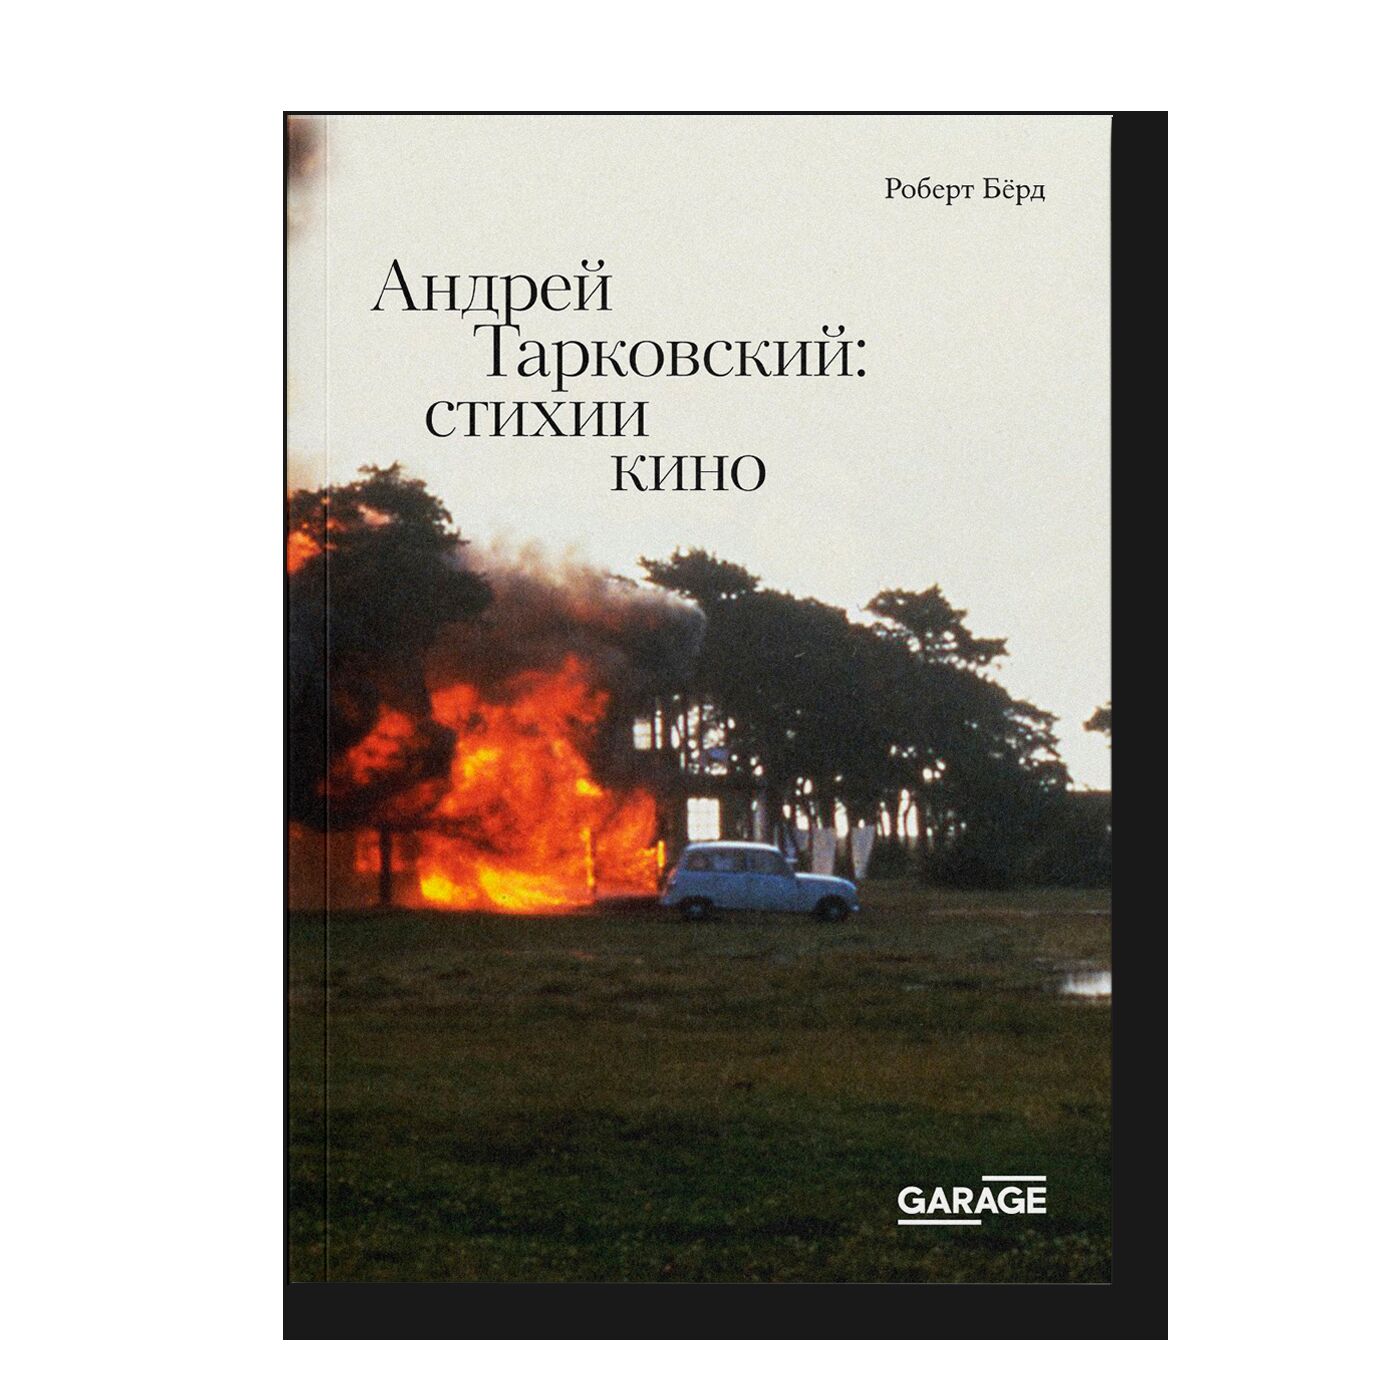 Andrei Tarkovsky: Elements of Cinema